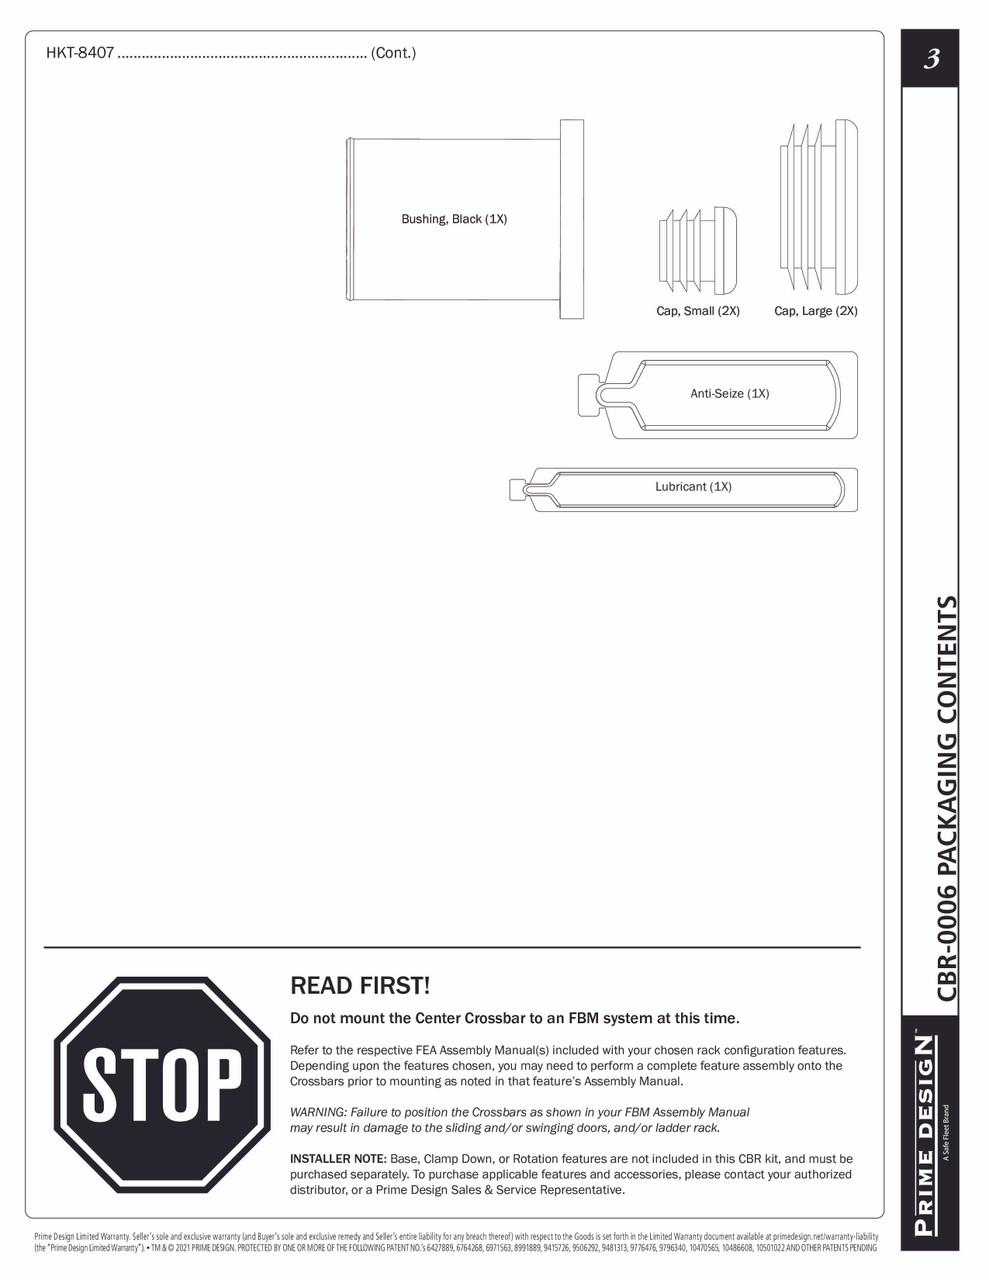 LadderProducts.com | Prime Design ErgoRack CrossBar Kit 78" CBR-0006